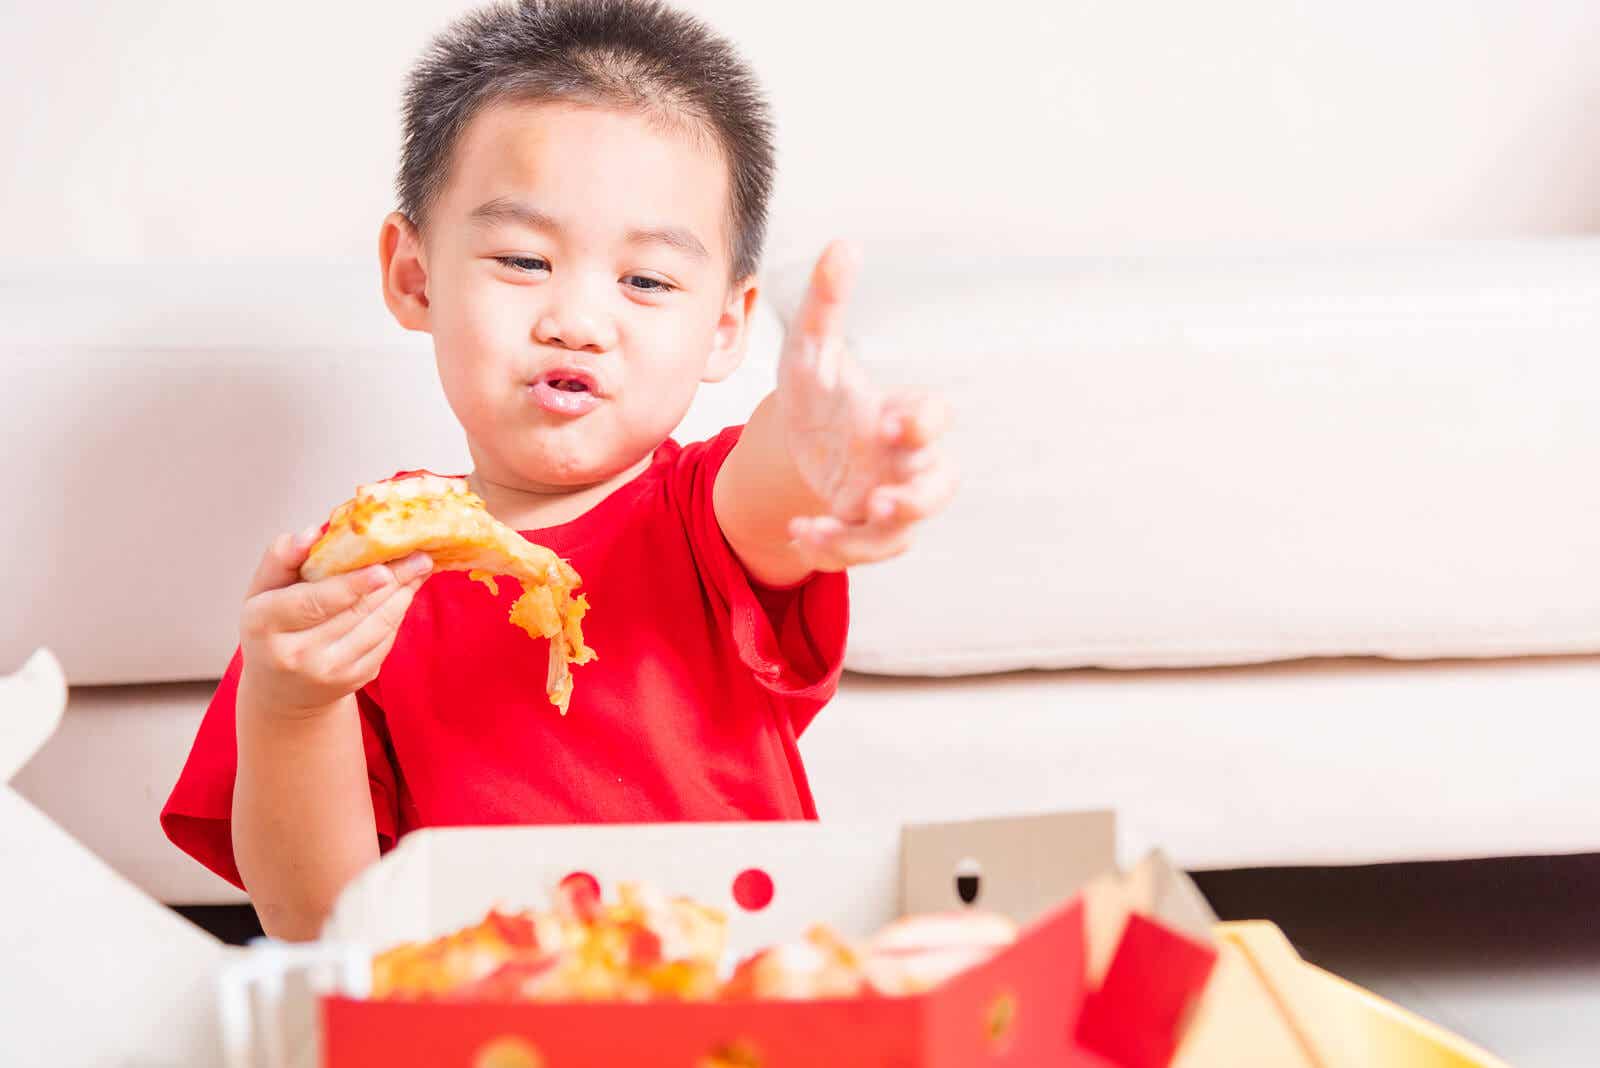 A toddler eating junk food.